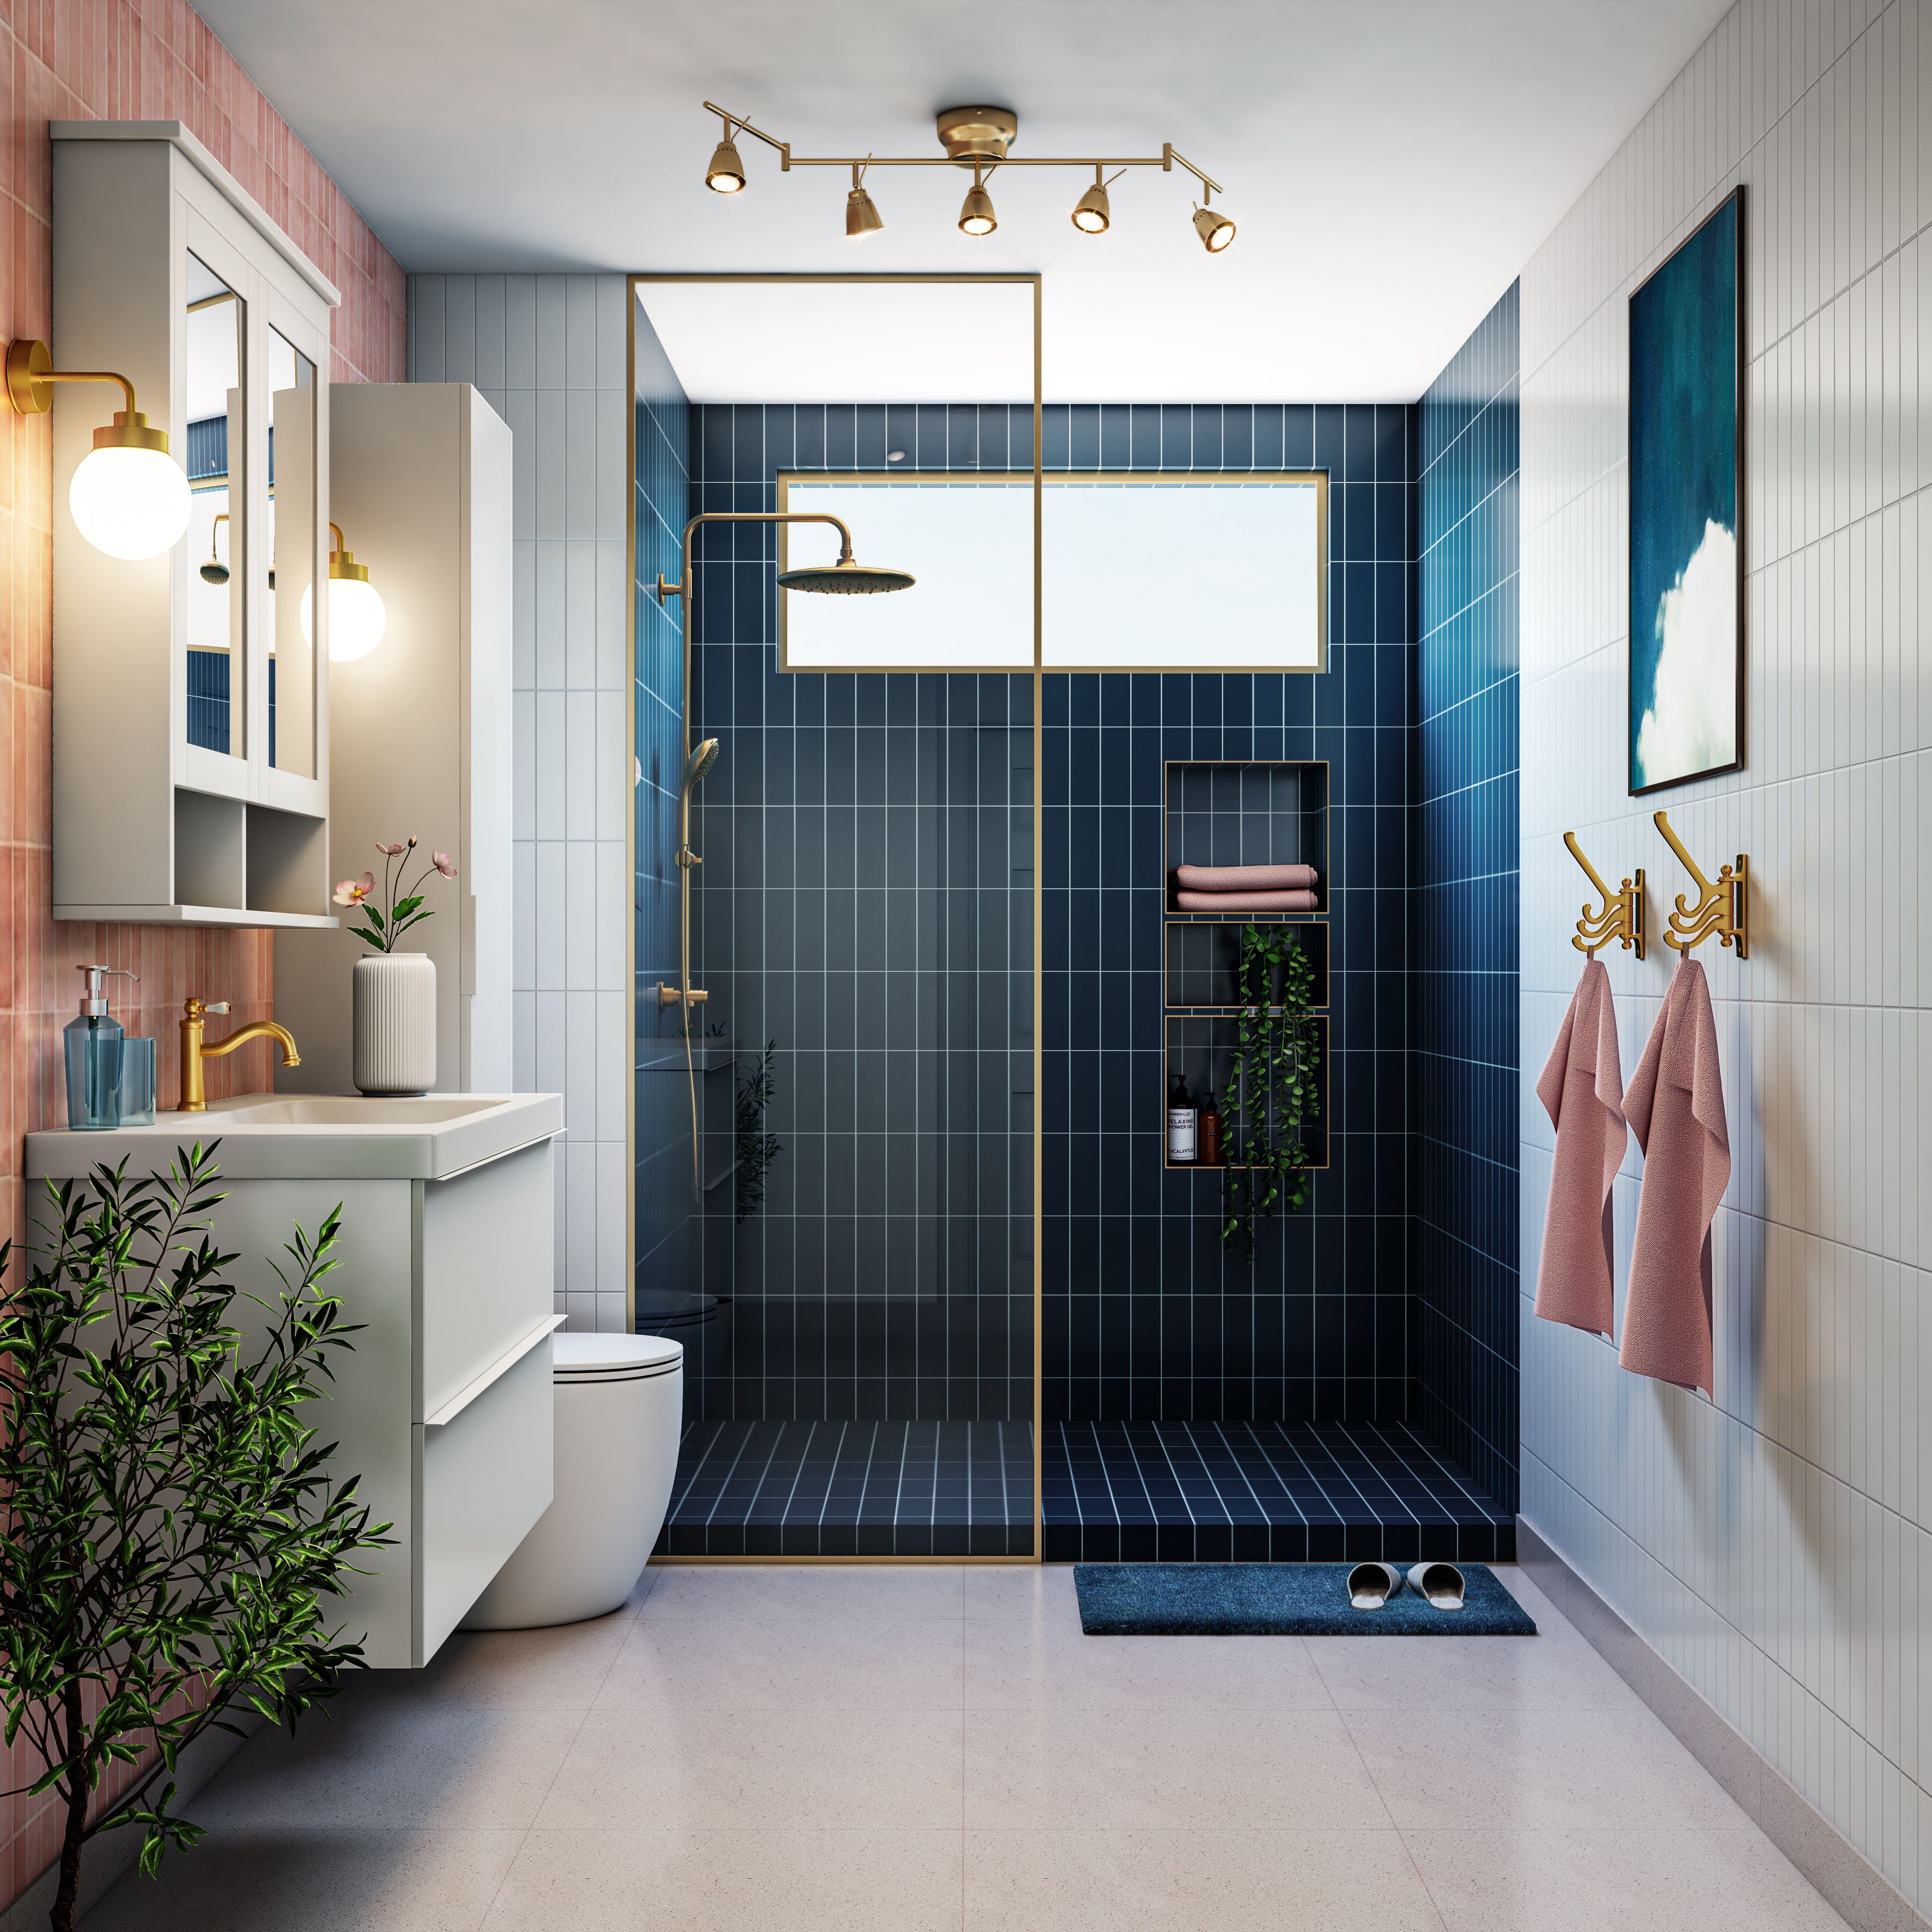 Modern Bathroom Design With Blue Tiles